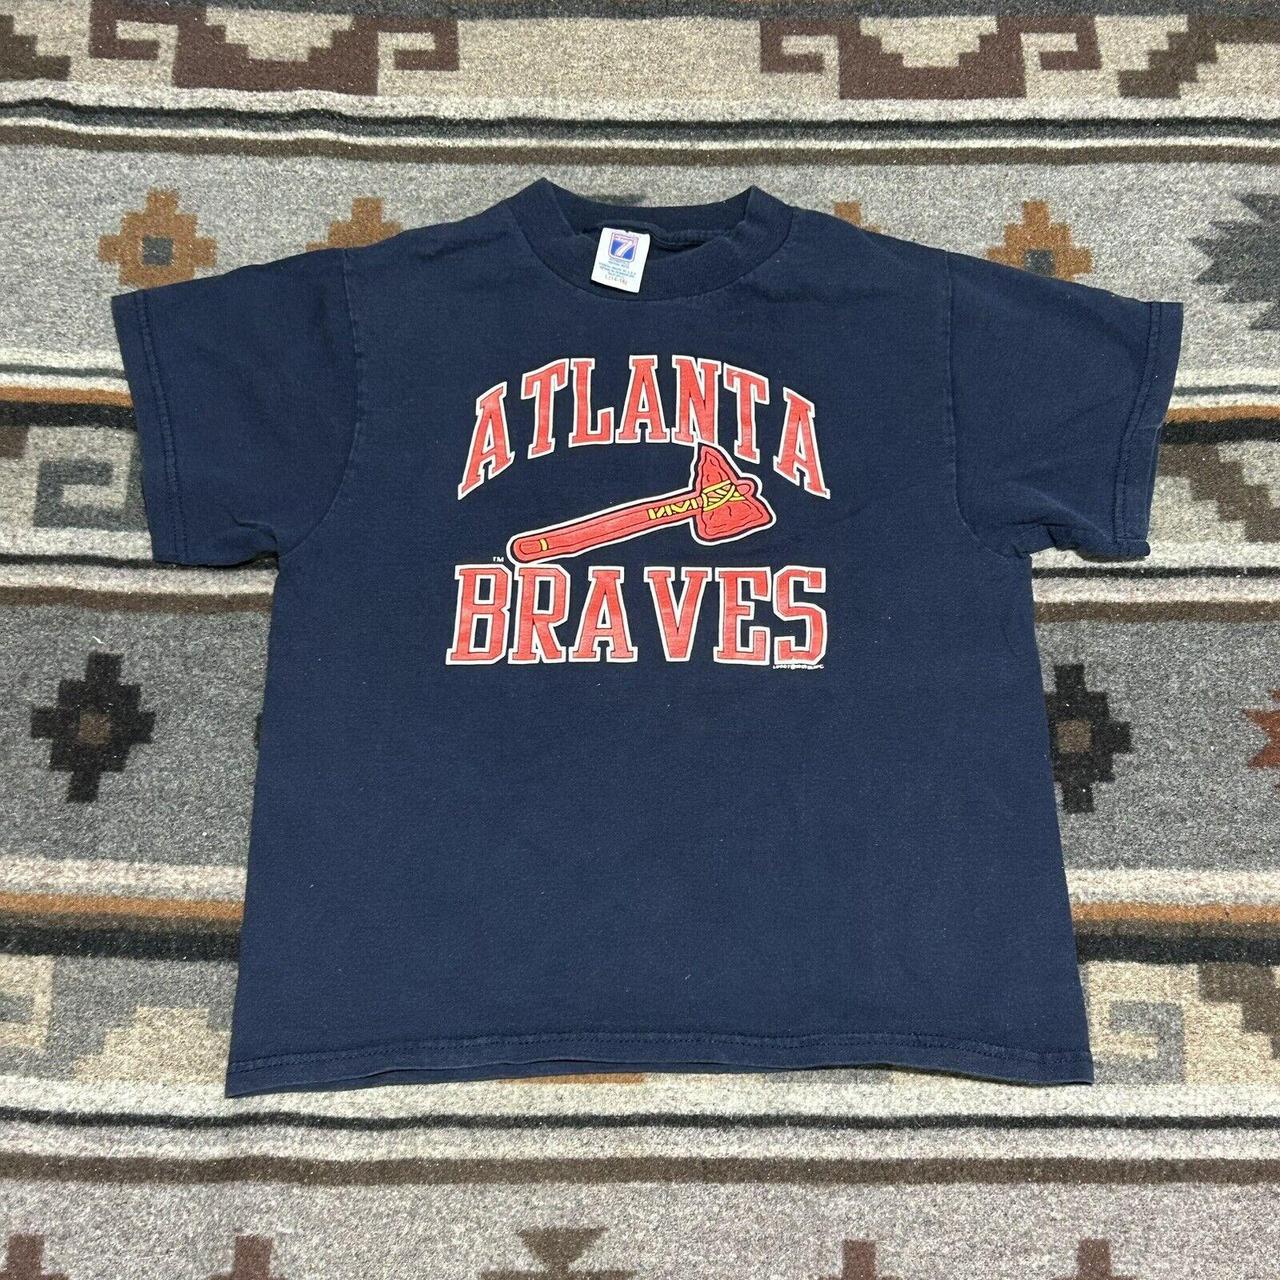 MLB Men's Shirt - Navy - L